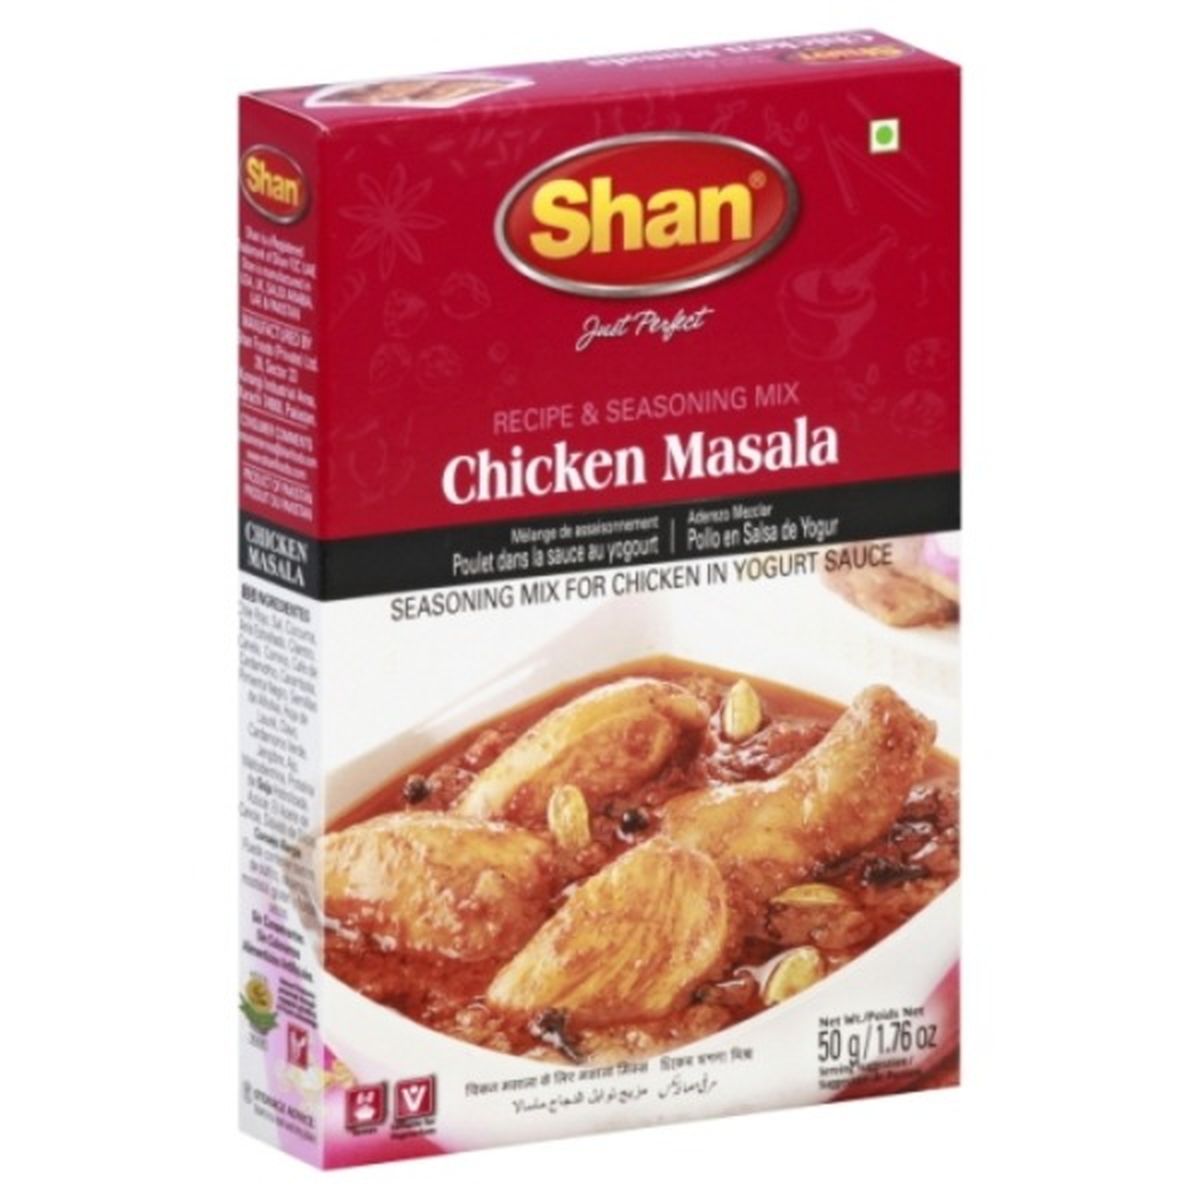 Calories in Shan Just Perfect Recipe & Seasoning Mix, Chicken Masala